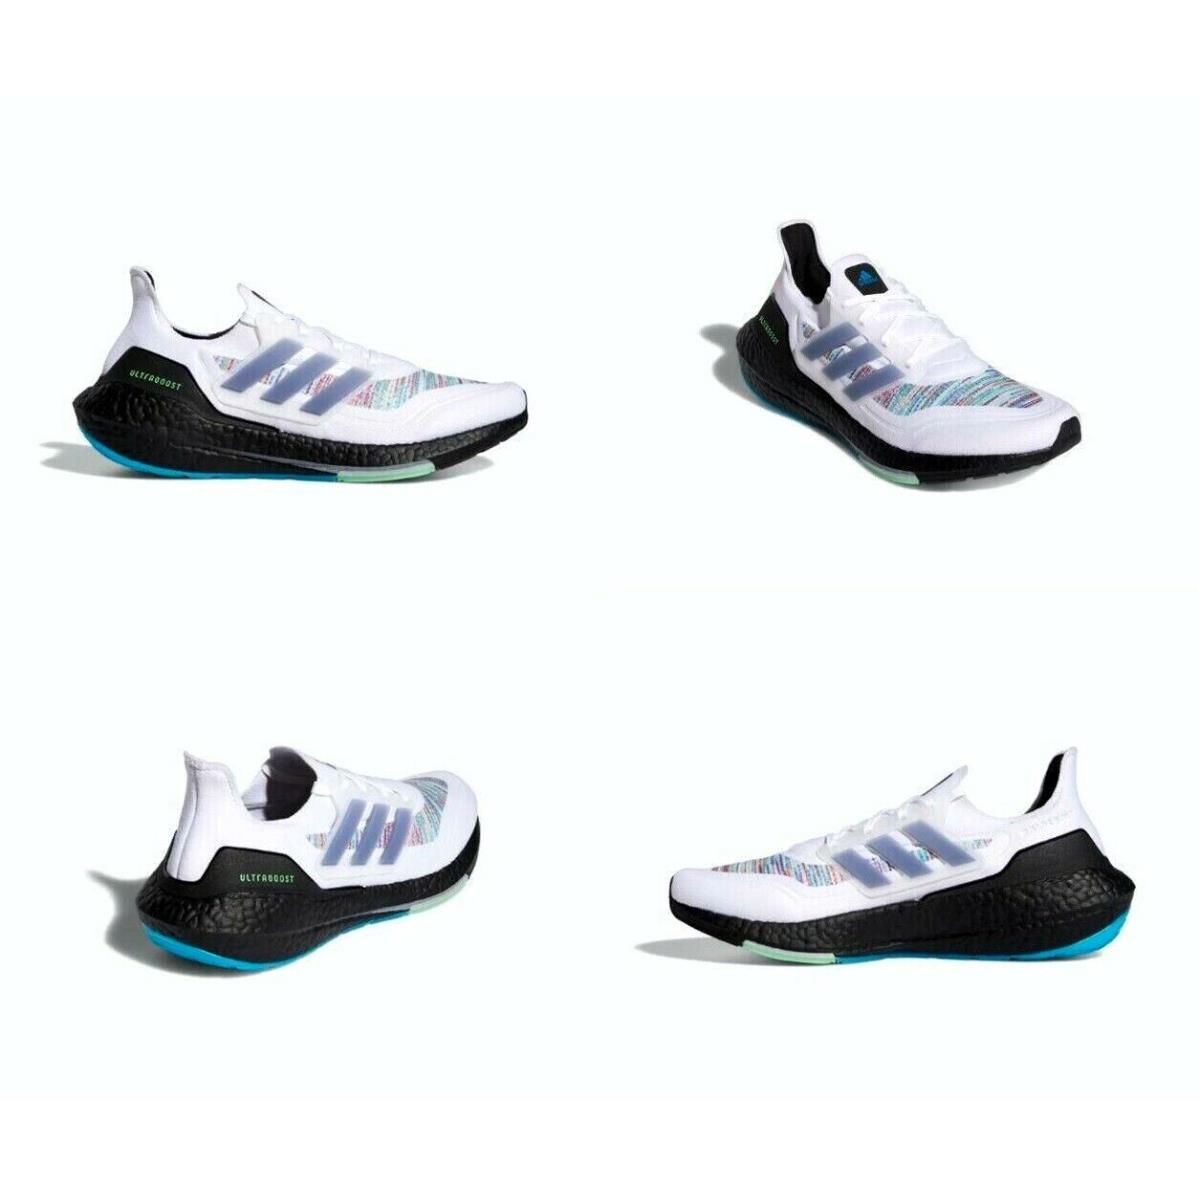 Adidas Ultraboost 21 White Black Green Running Shoes Men Size 9 US GZ3194